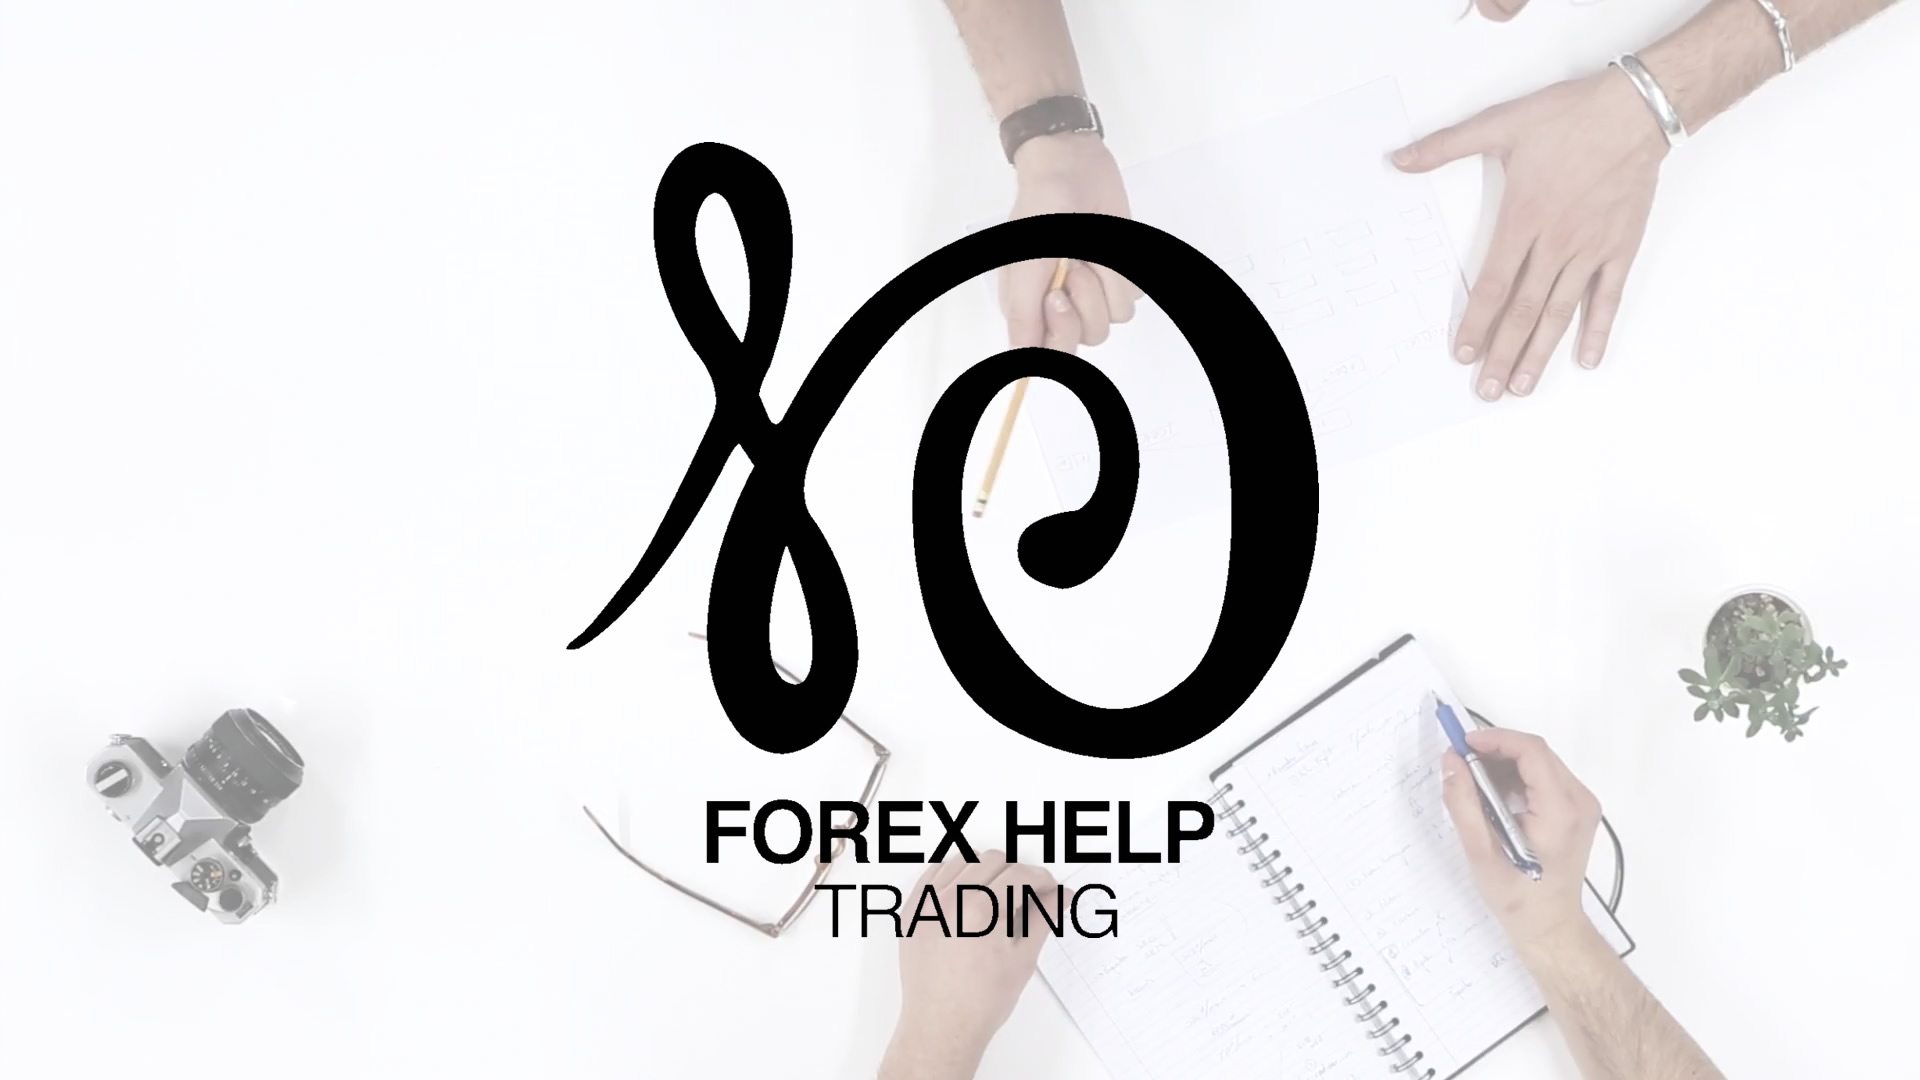 Us forex money transfer reviews